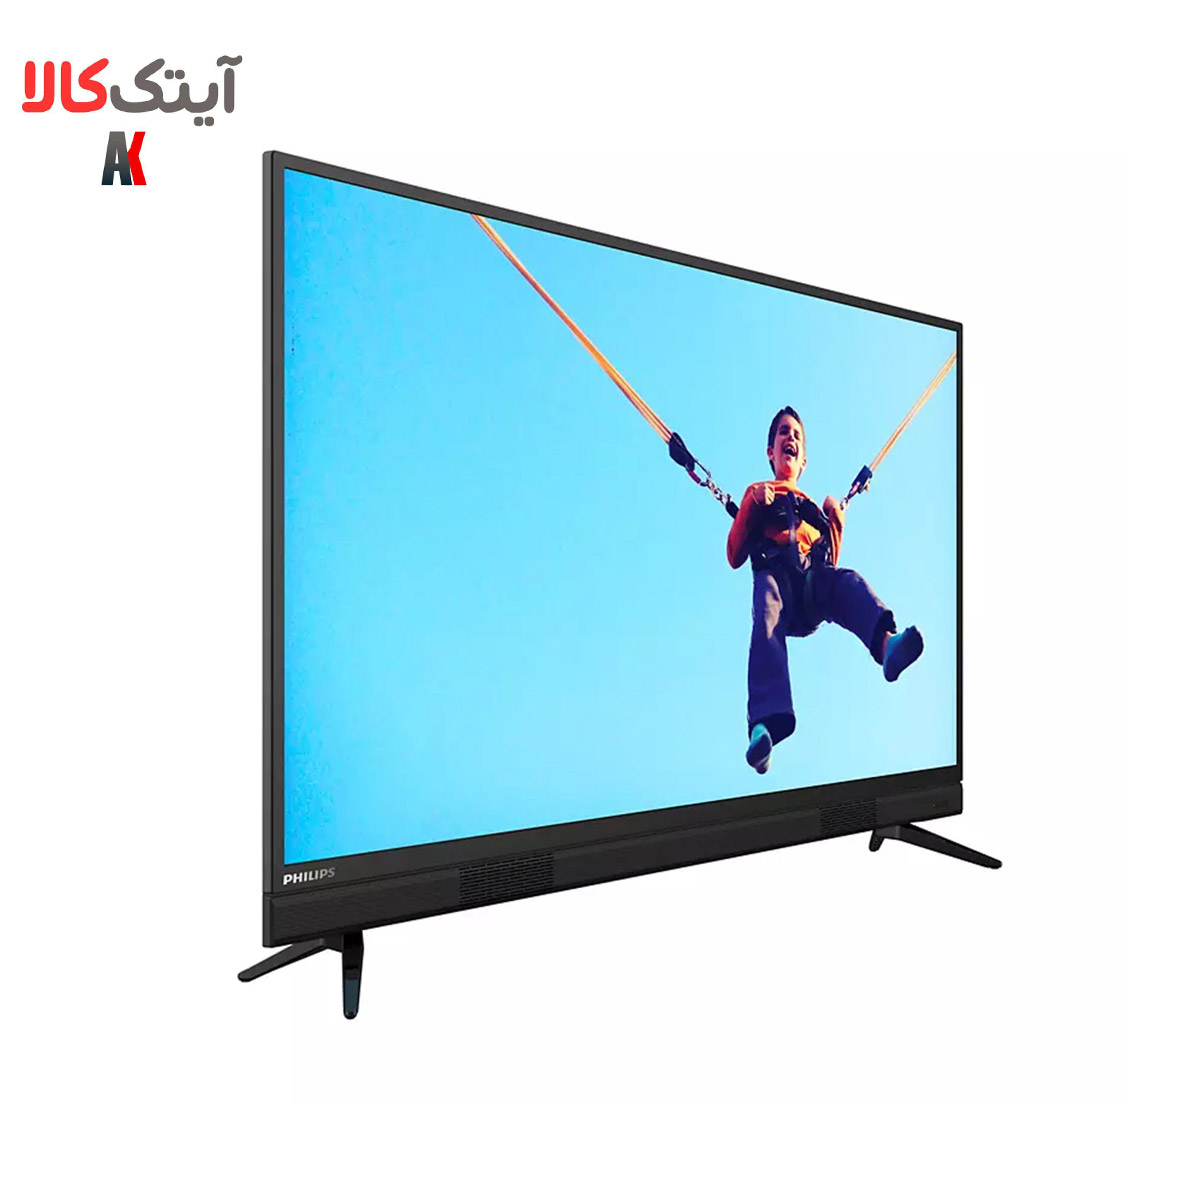 تلویزیون ال ای دی فیلیپس مدل 32PHT5583 سایز 32 اینچ مشخصات، قیمت و خریدمحصول